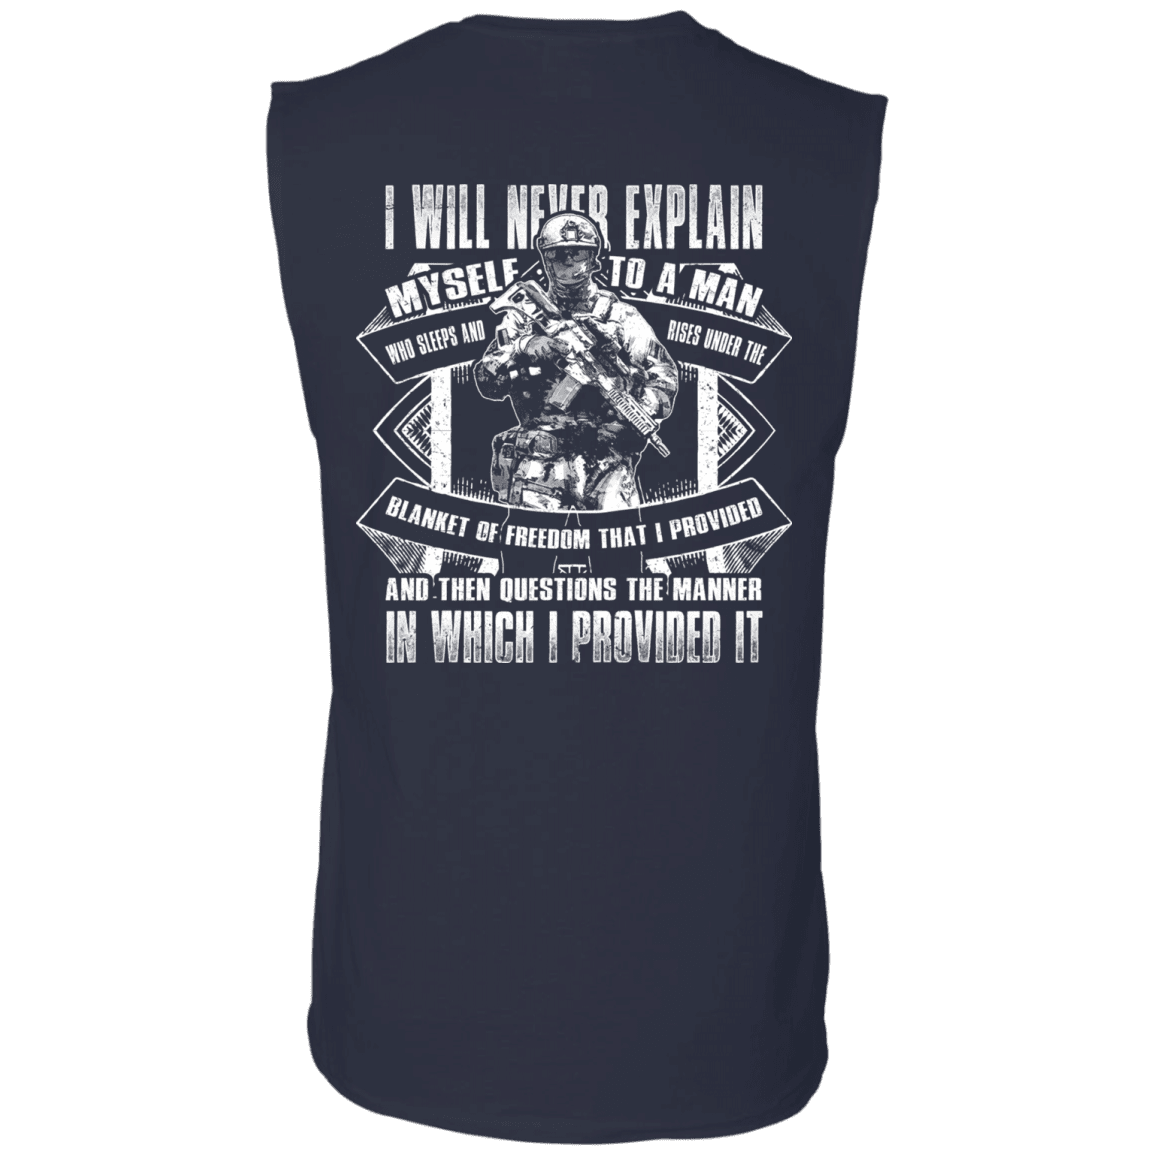 Military T-Shirt "I will never explain myself to a man" Men Back-TShirt-General-Veterans Nation